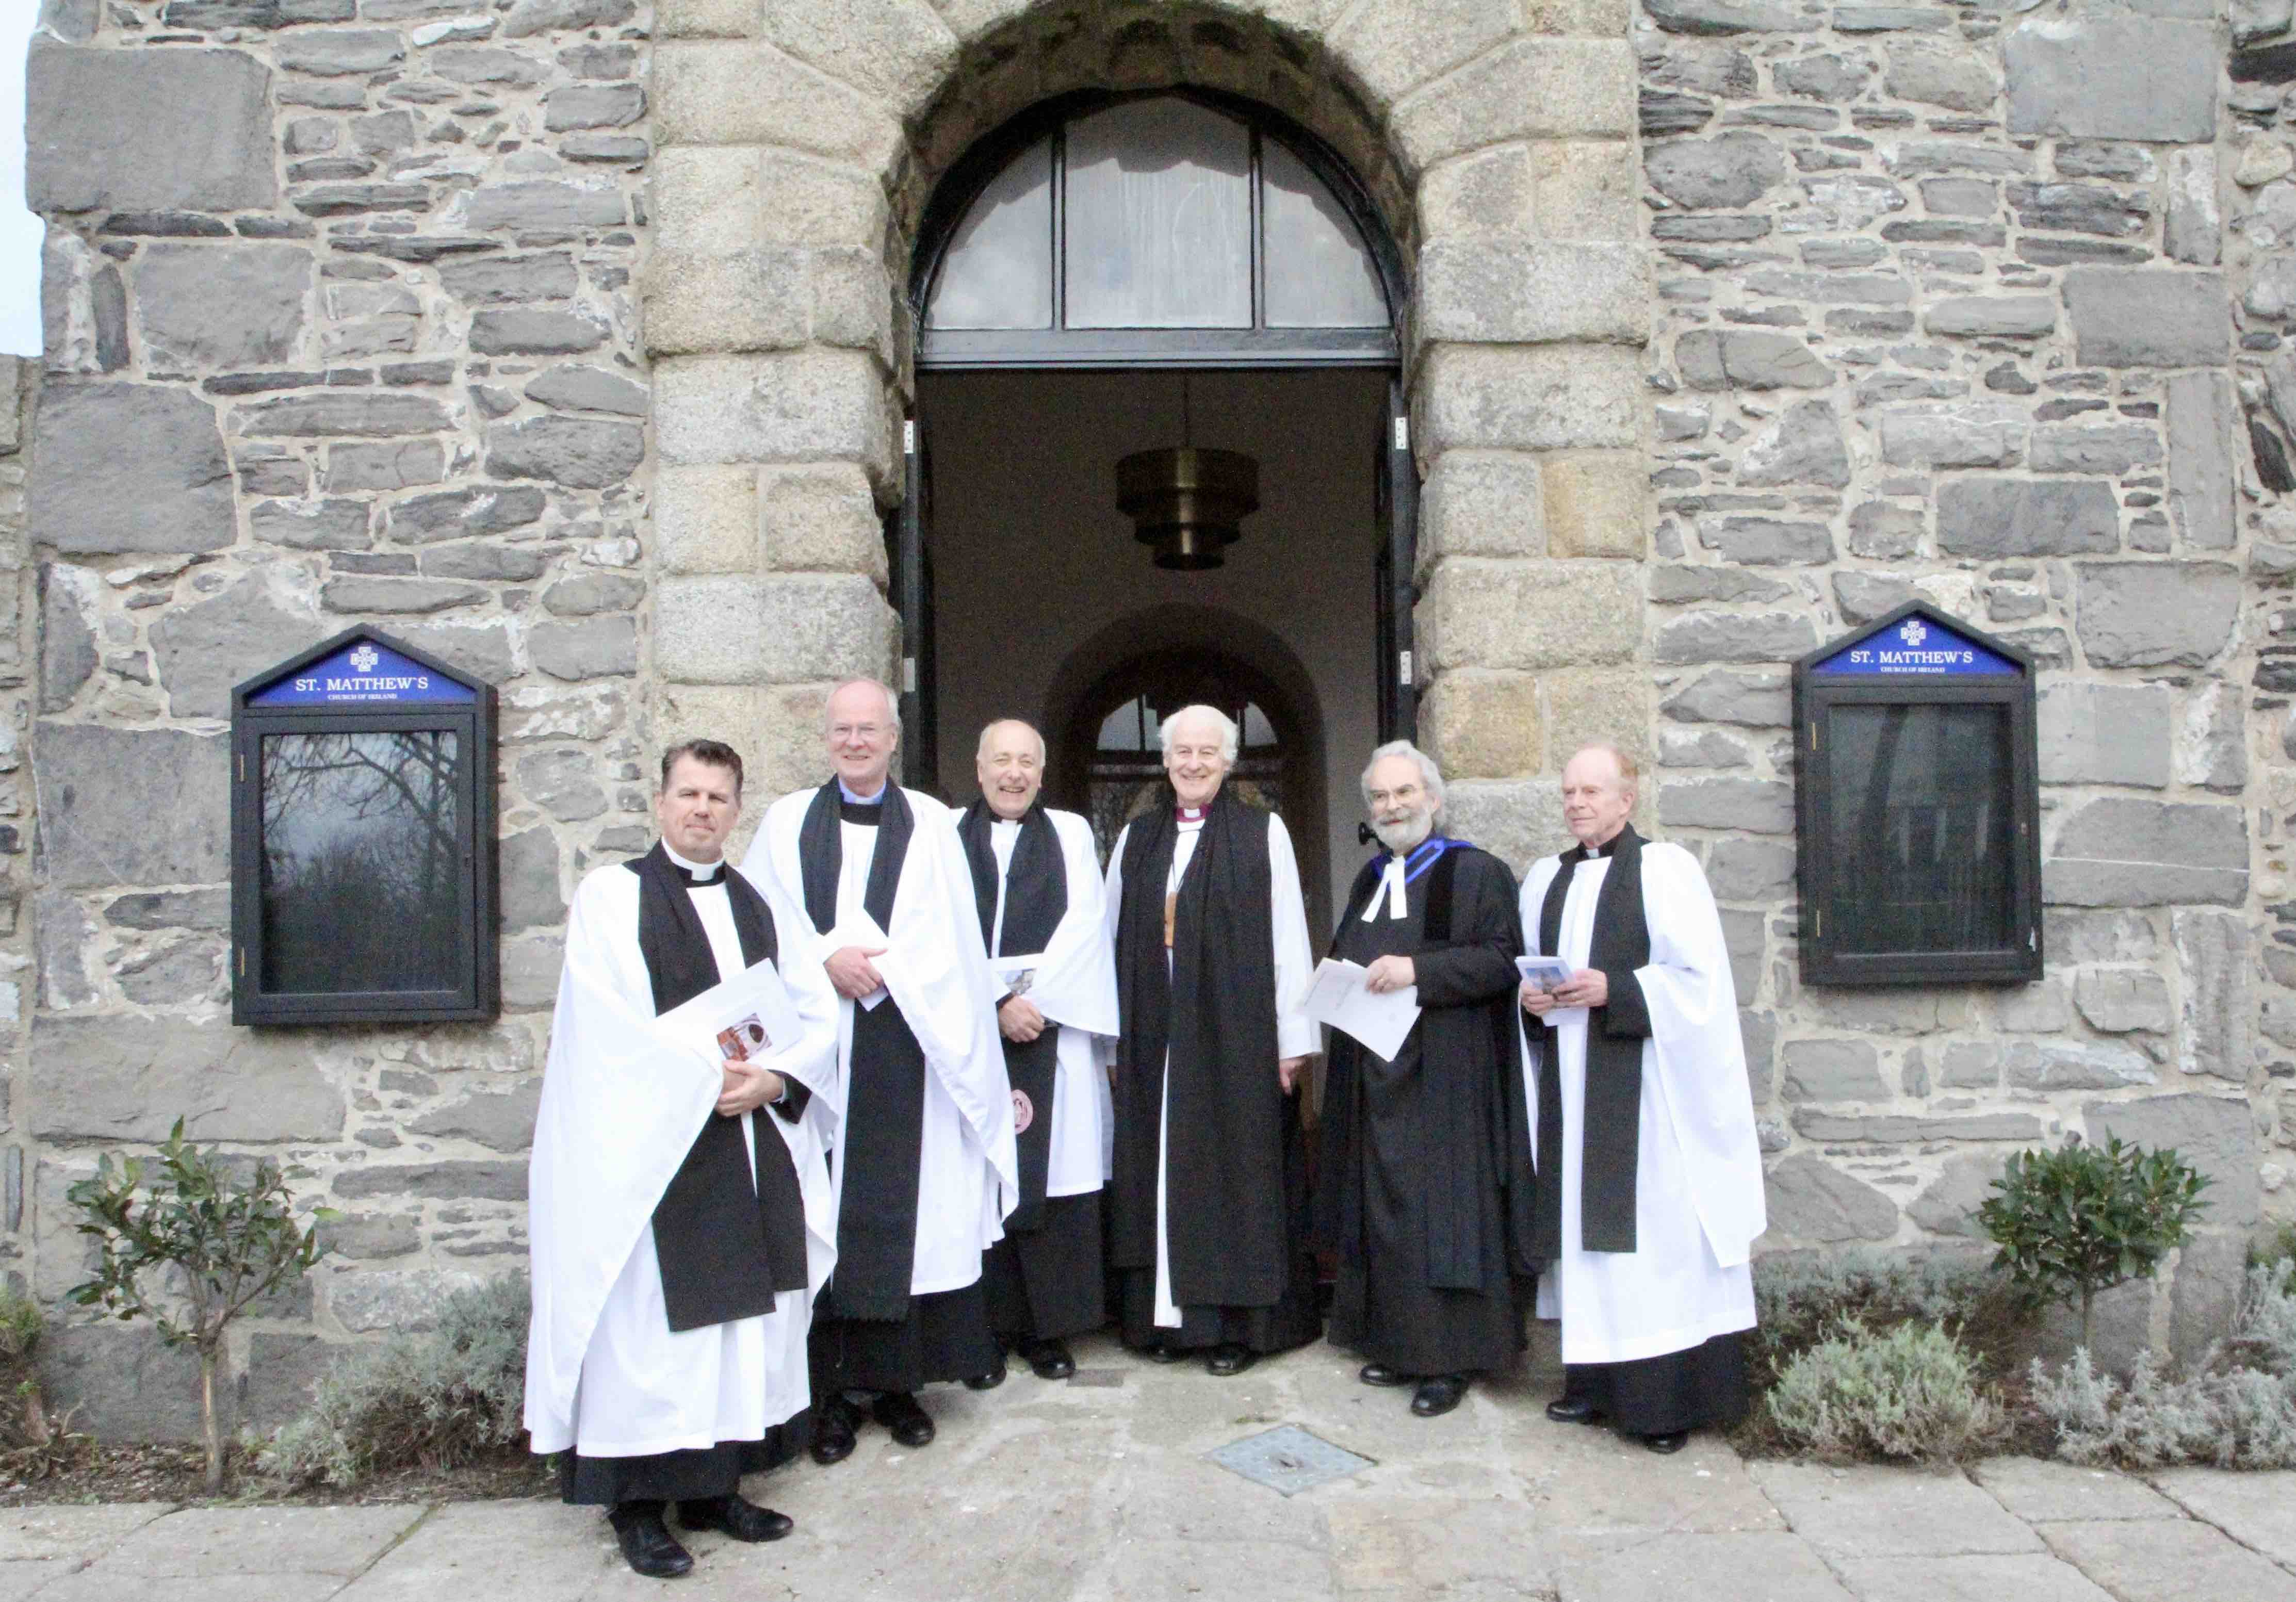 Deacon Intern the Revd Mathew McCauley, the Revd Niall Stratford, Canon Leonard Ruddock (Rector), Archbishop Michael Jackson, the Revd Robert Marshall (registrar) and the Revd John Marchant (previous Rector).